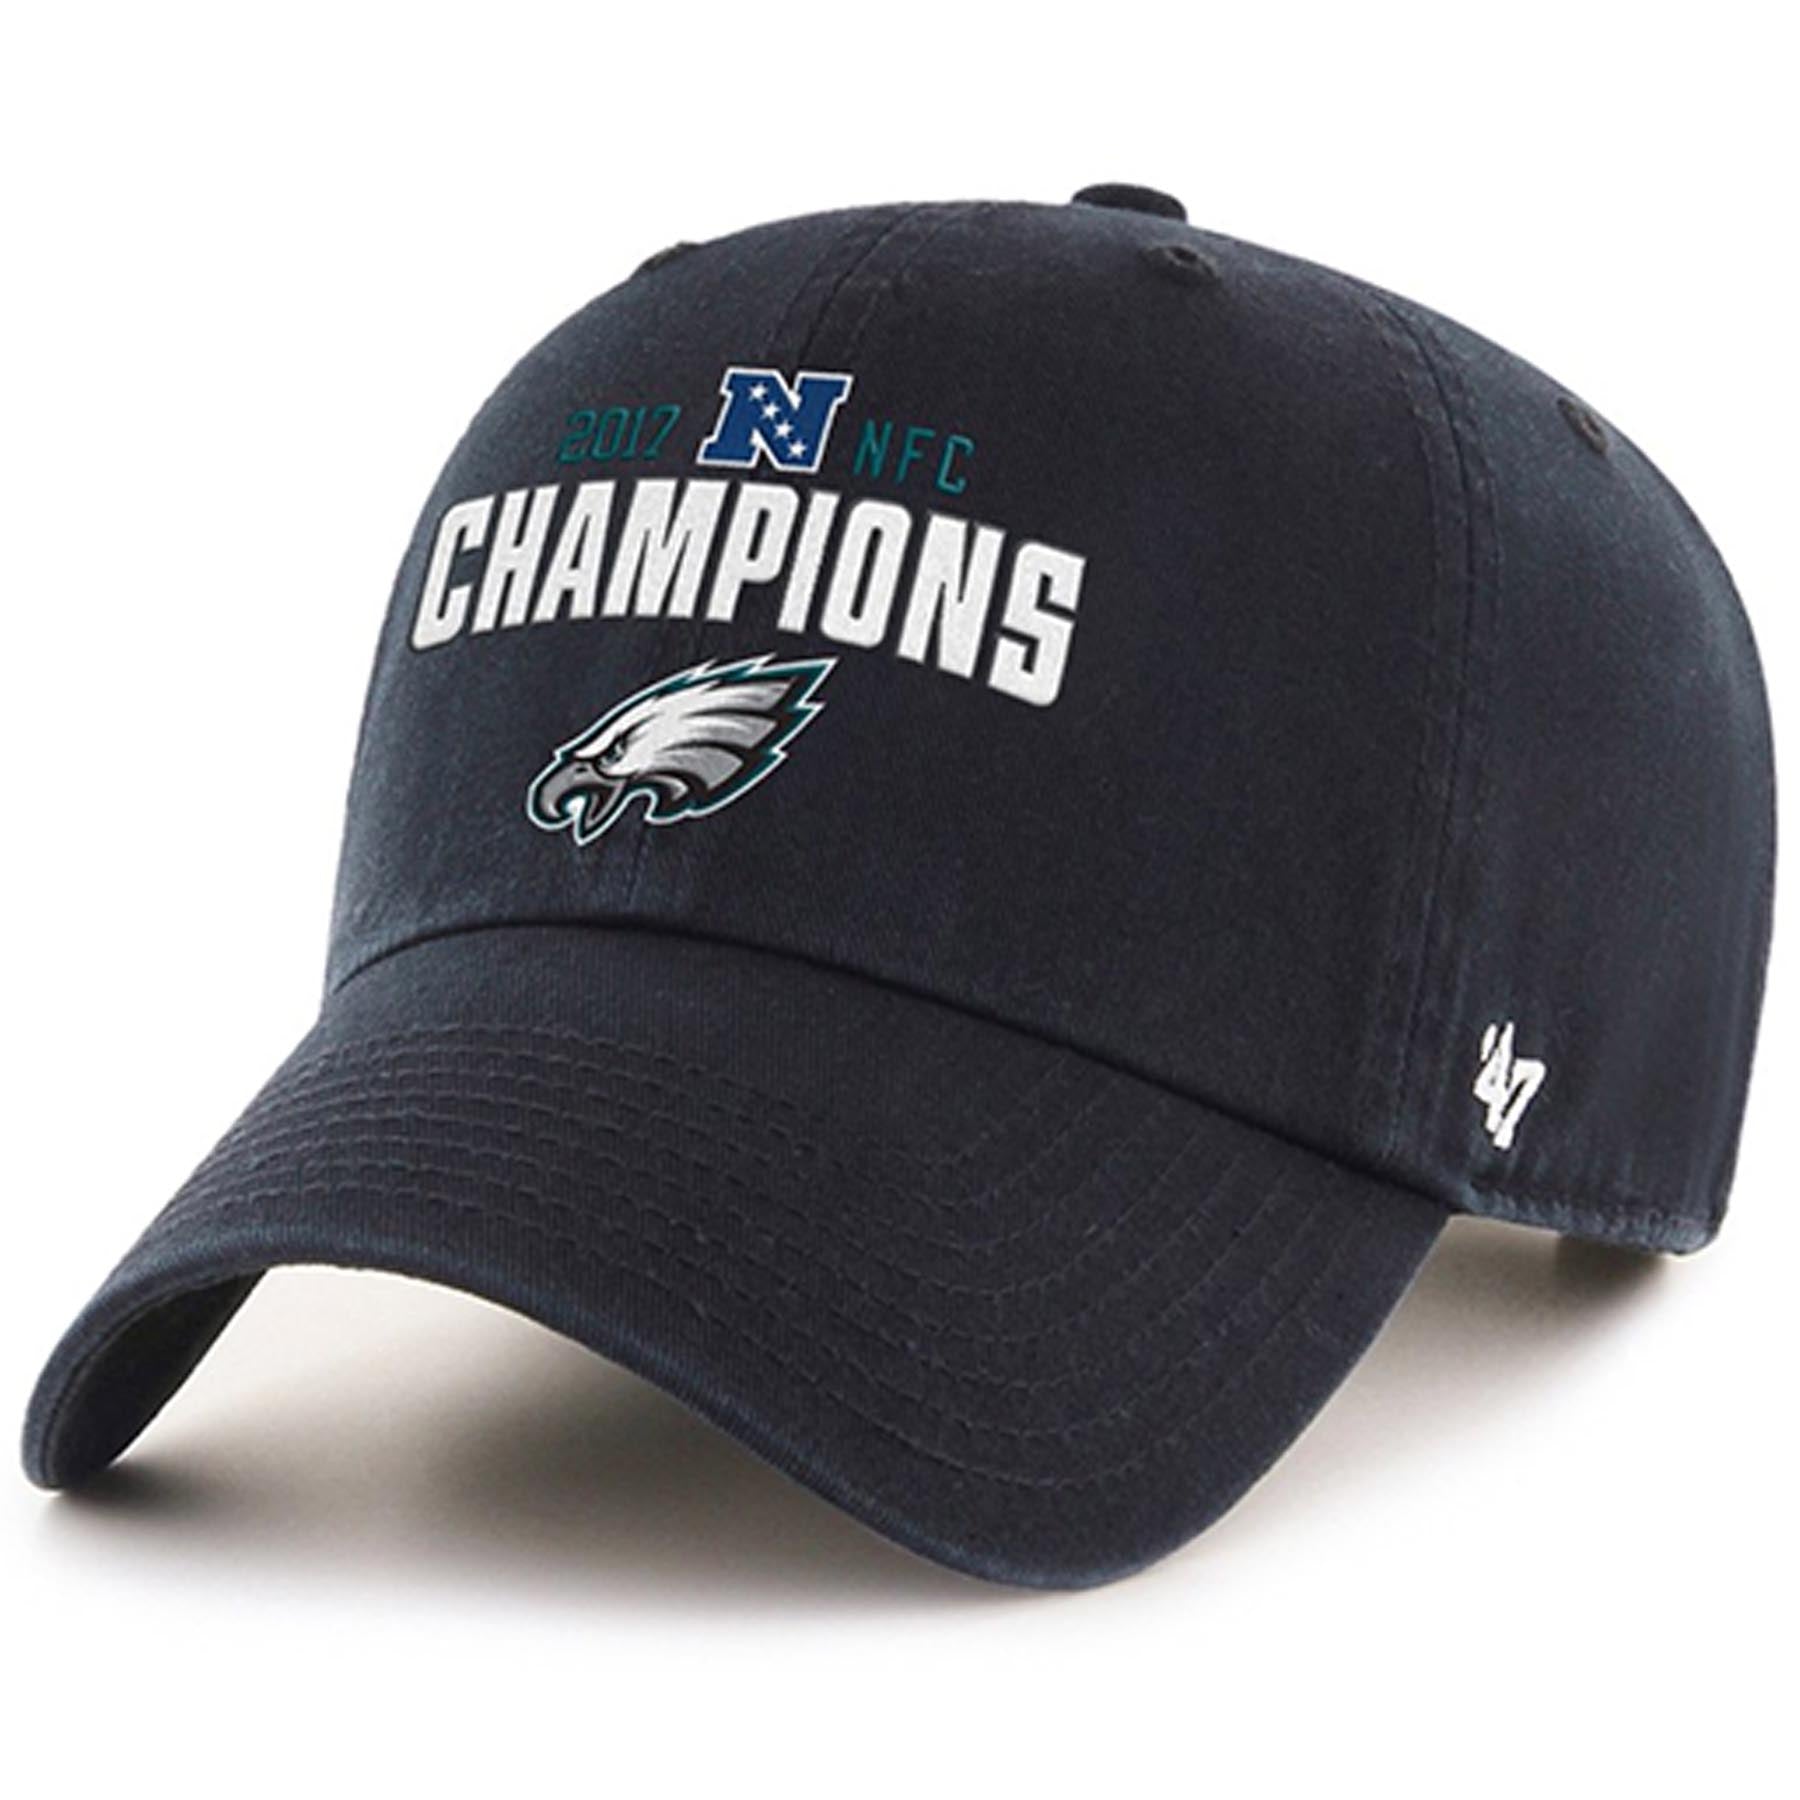 nfc championship hat